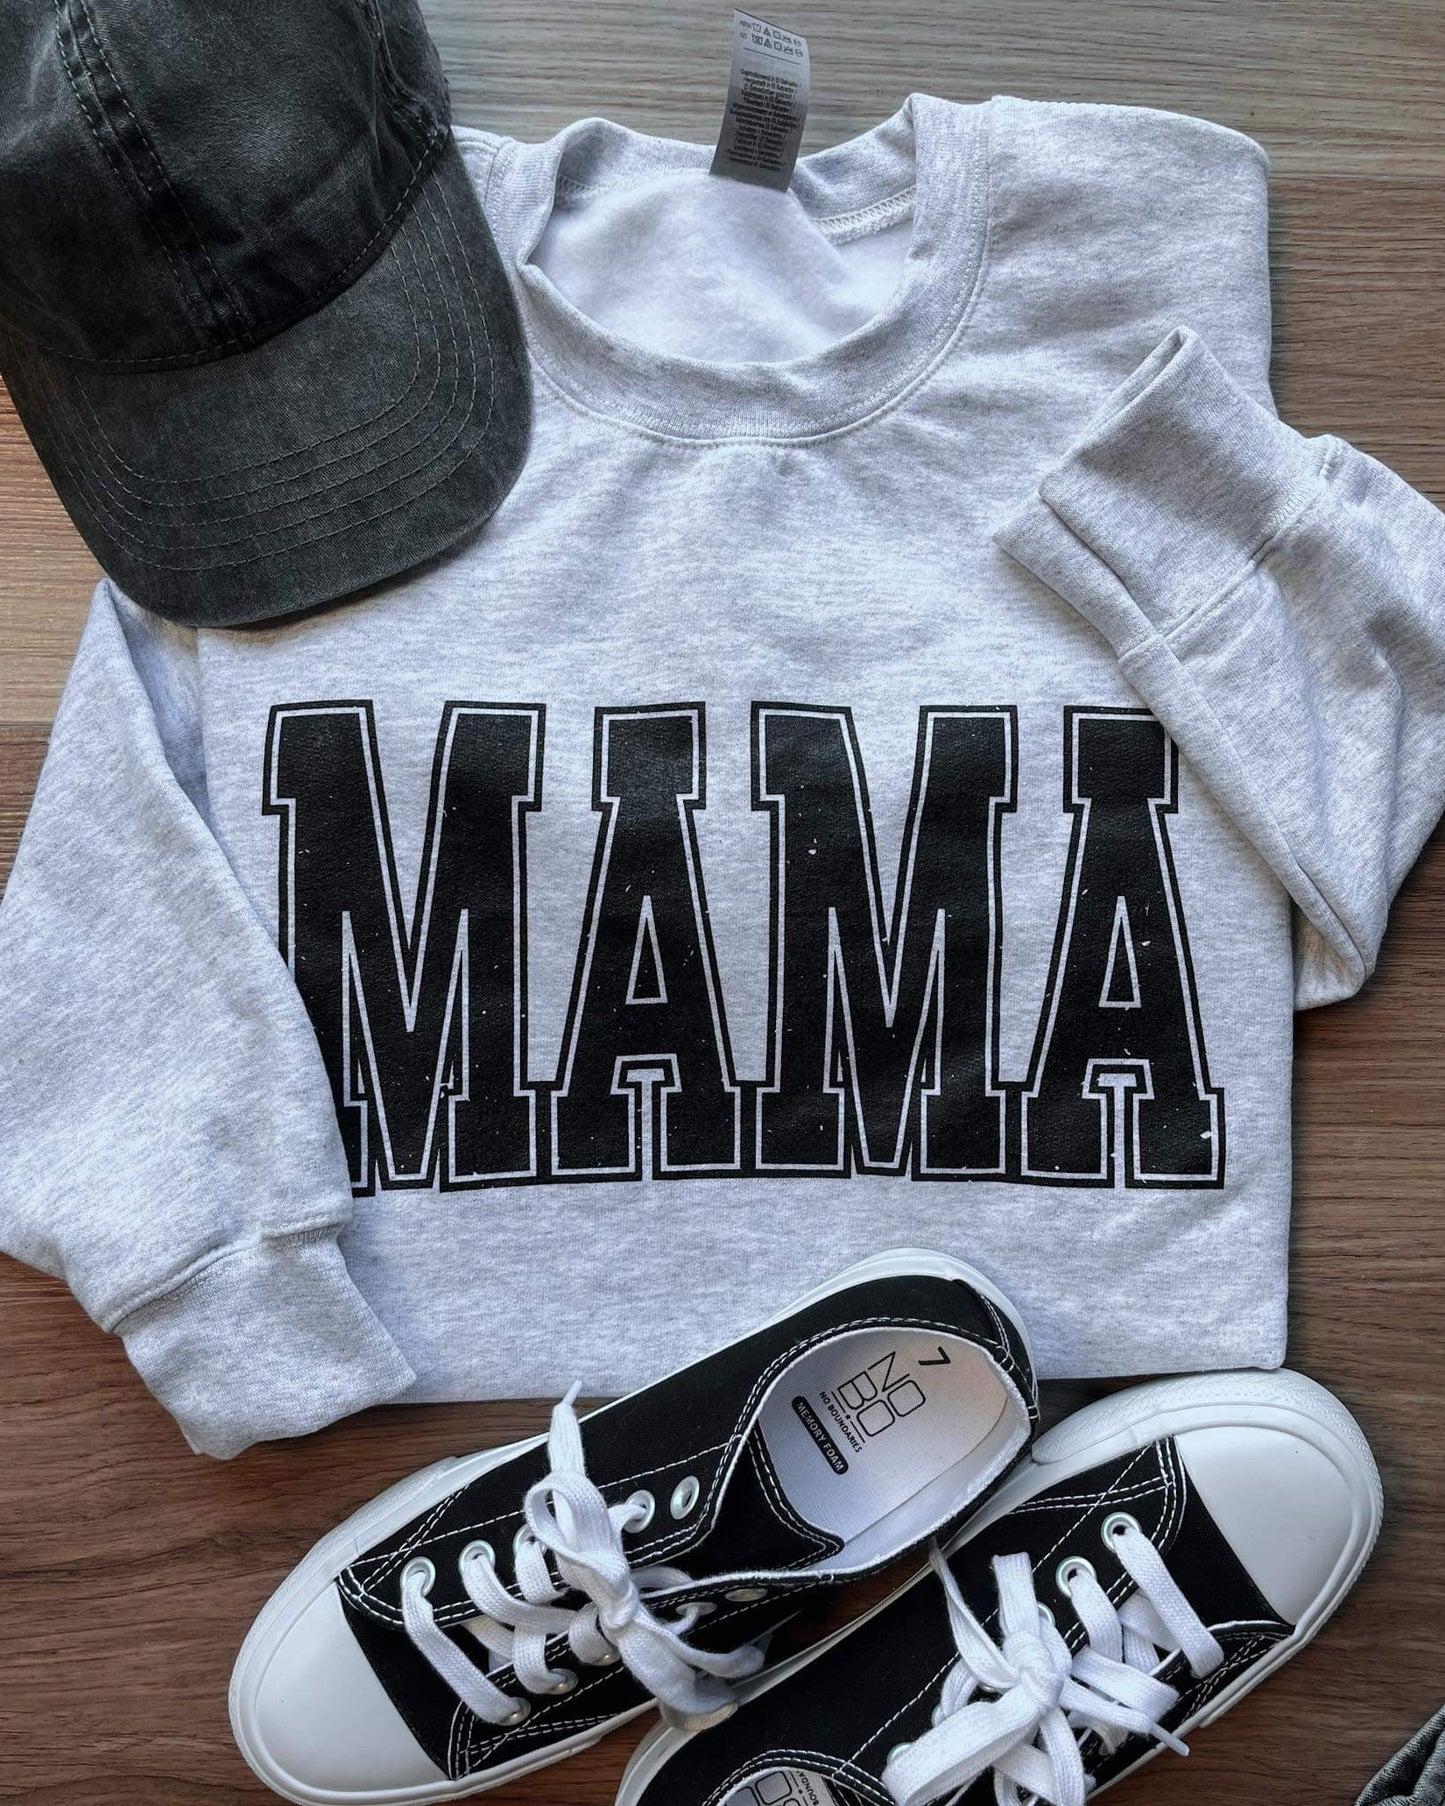 MAMA Block Sweatshirt